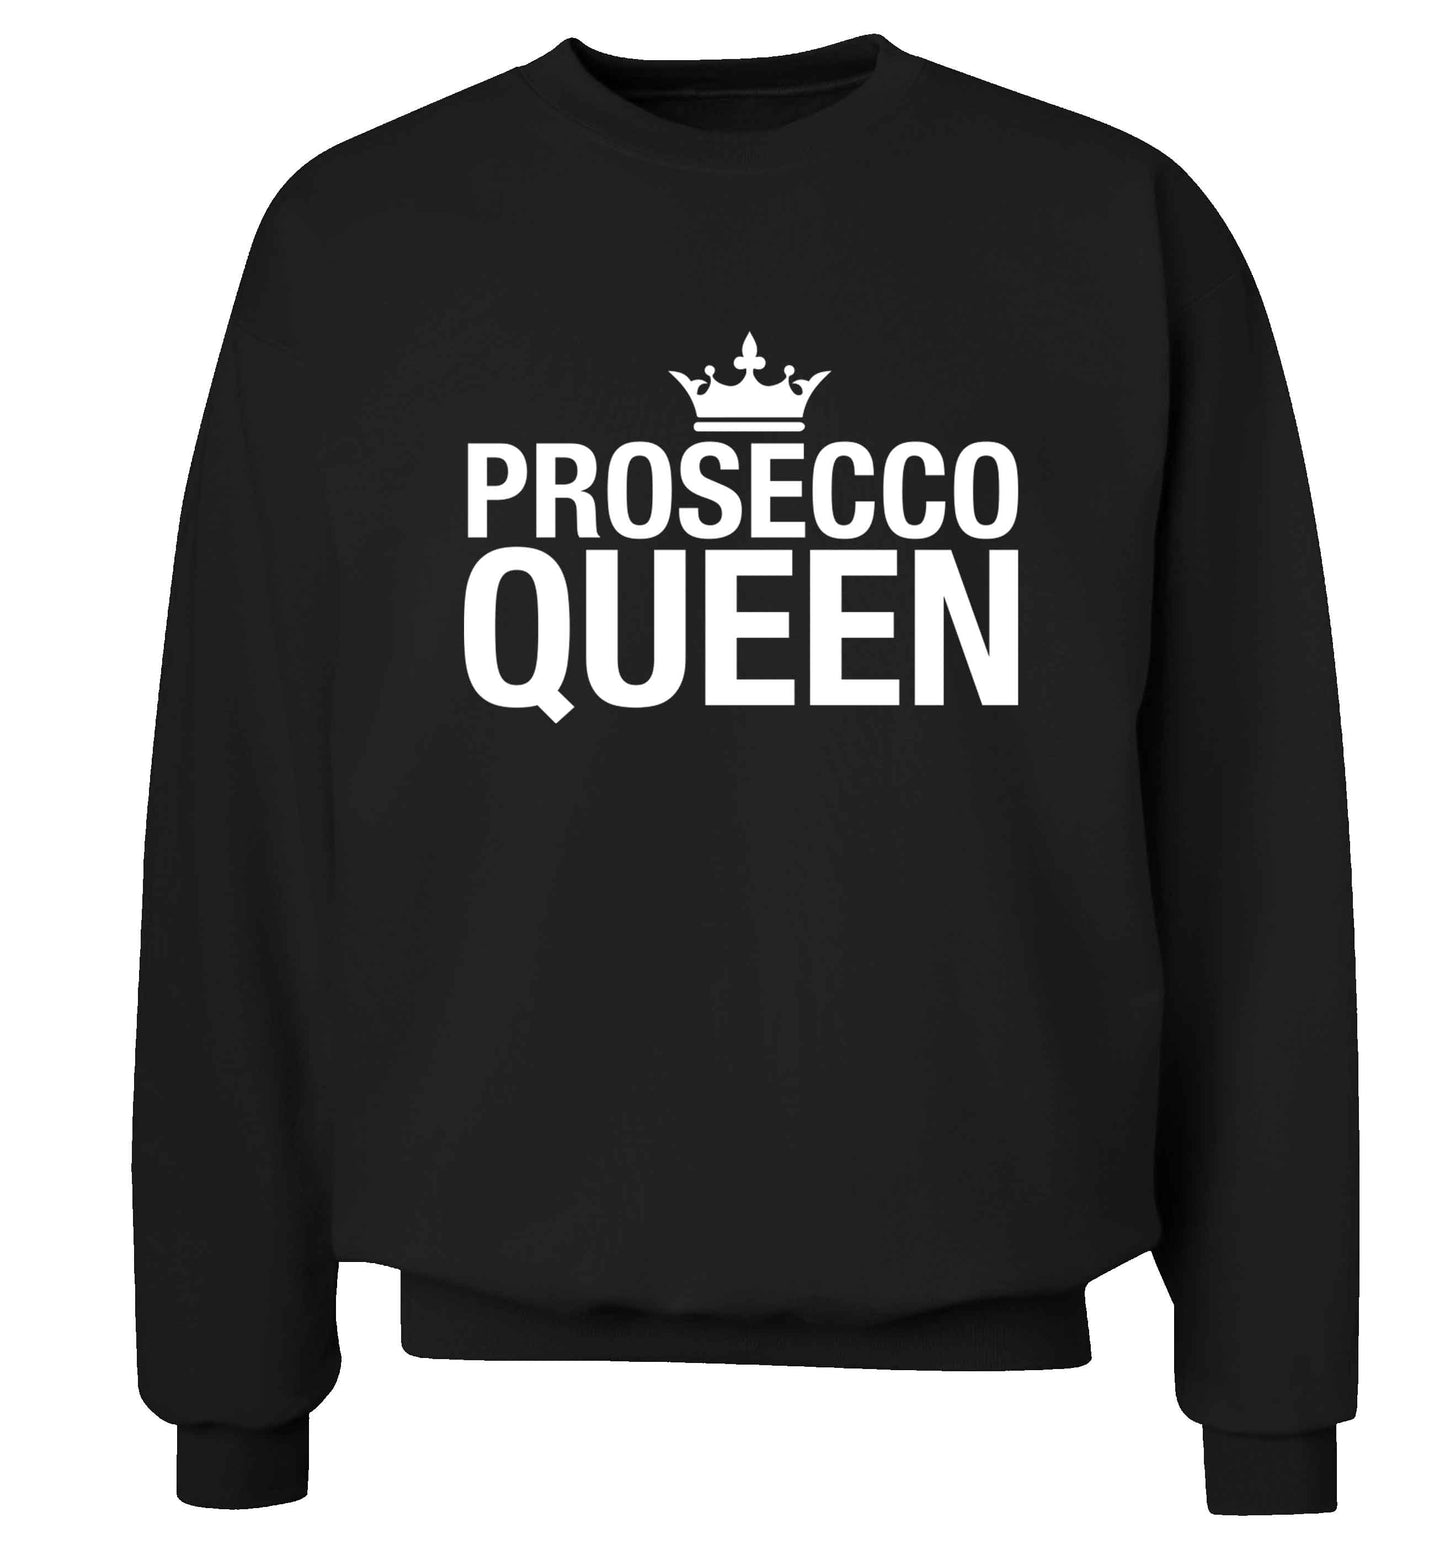 Prosecco queen Adult's unisex black Sweater 2XL